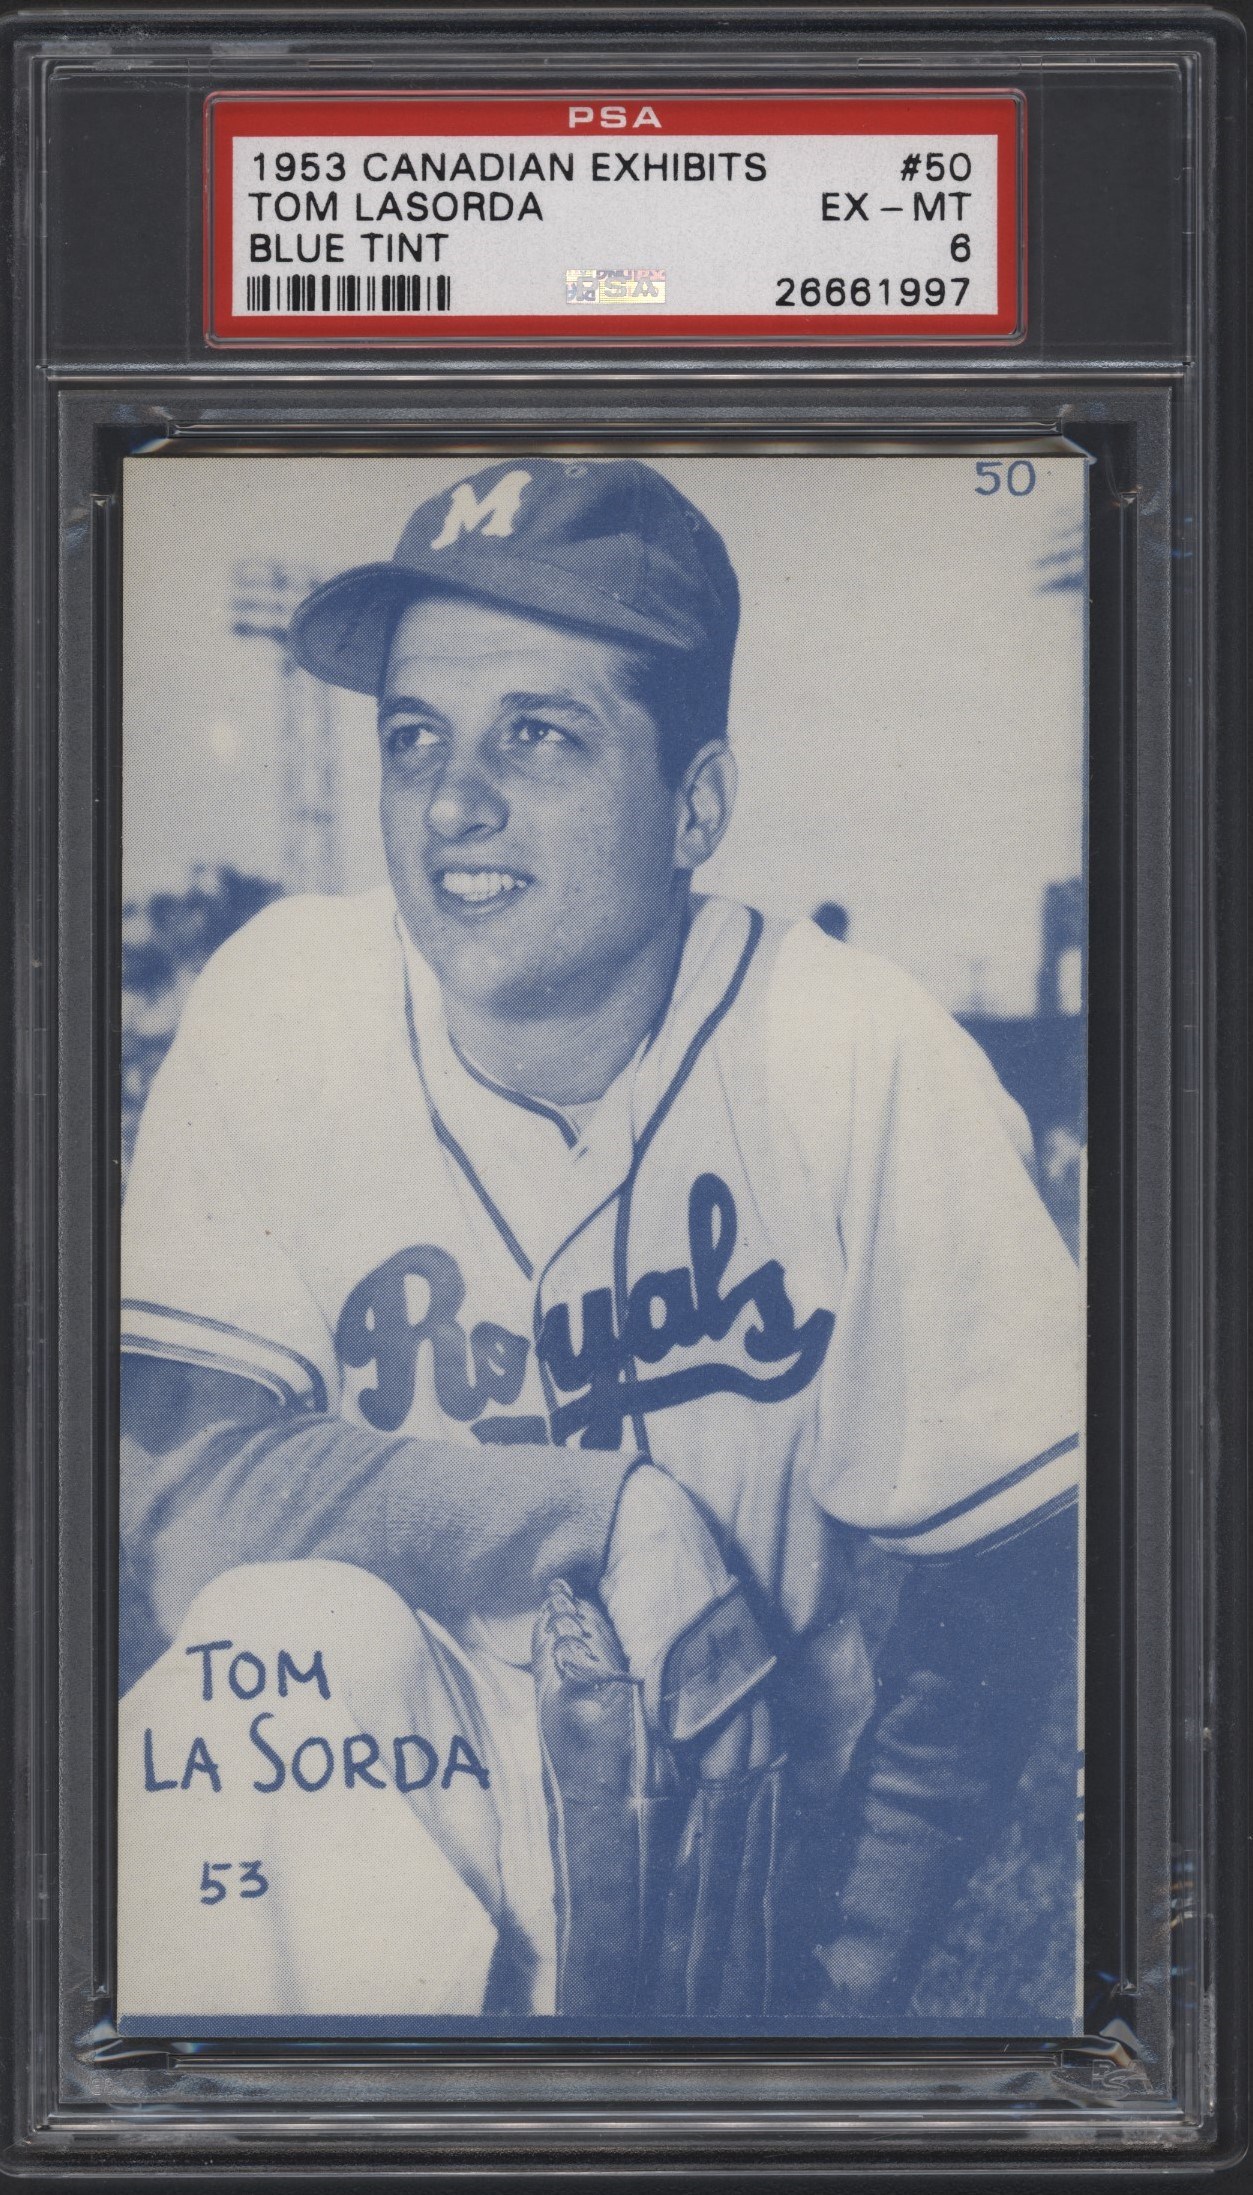 Baseball and Trading Cards - 1953 Canadian Exhibit Tom Lasorda #50 Blue Tint PSA Graded EX-MT 6